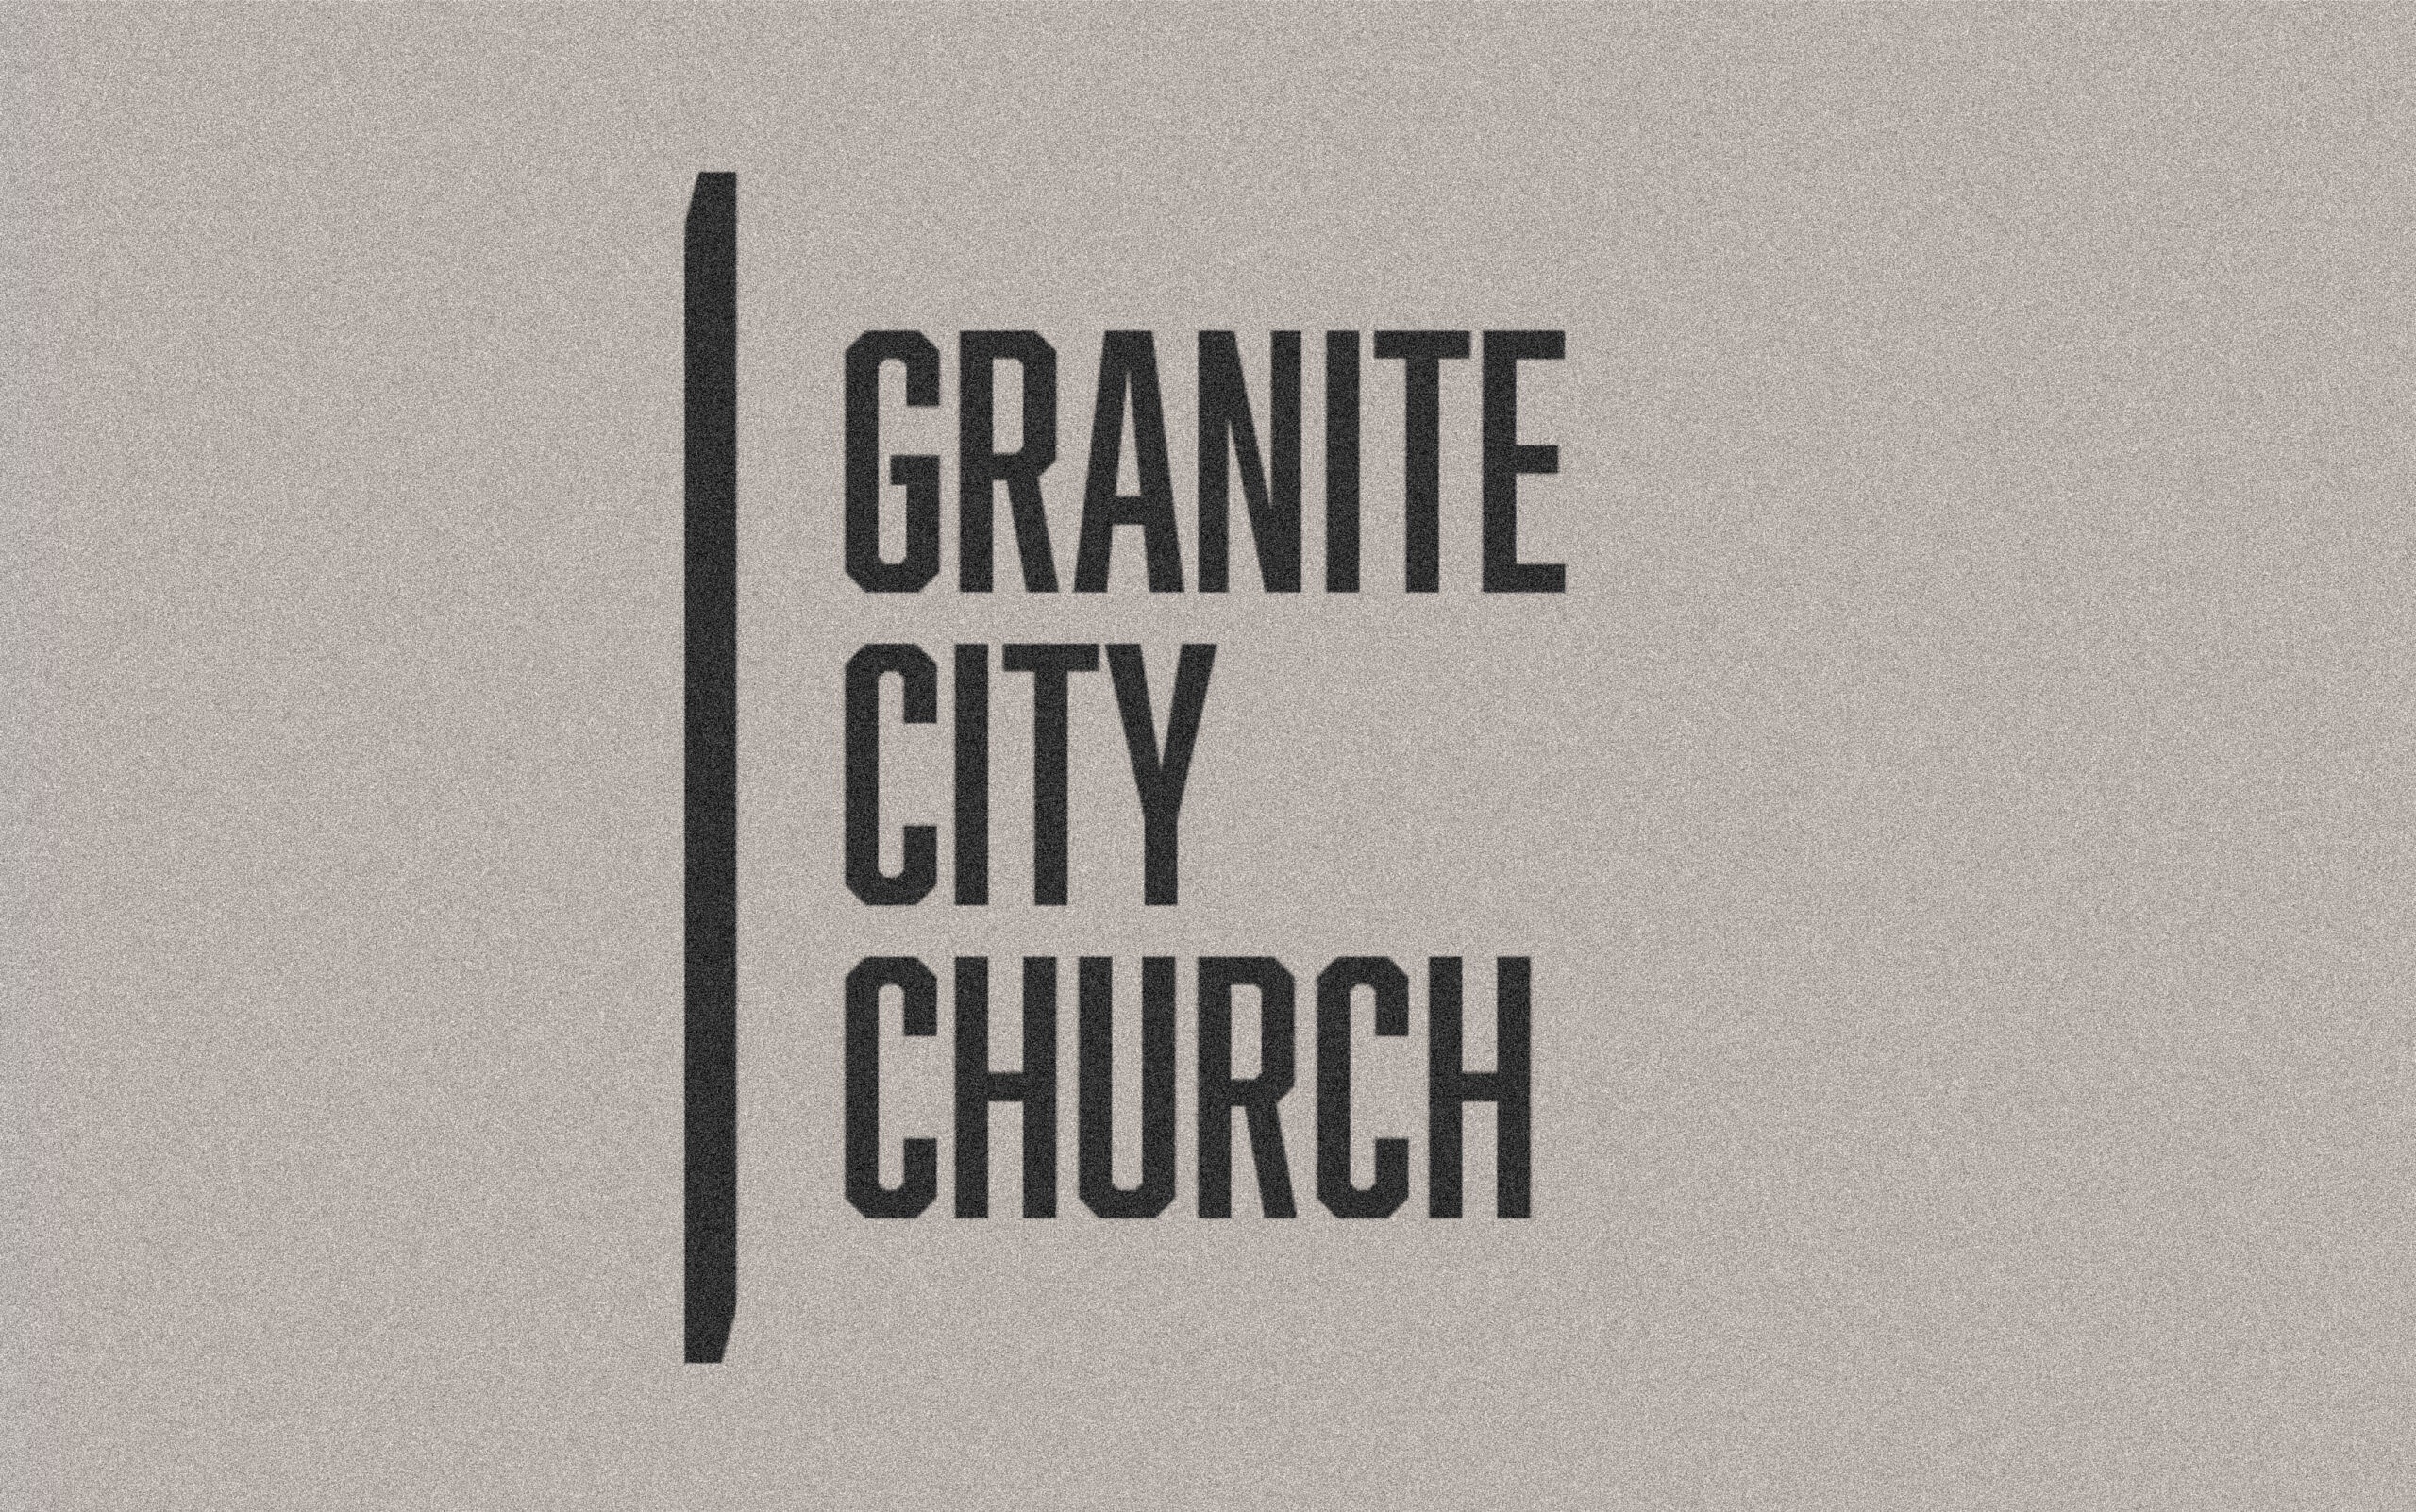 Granite City Church logo